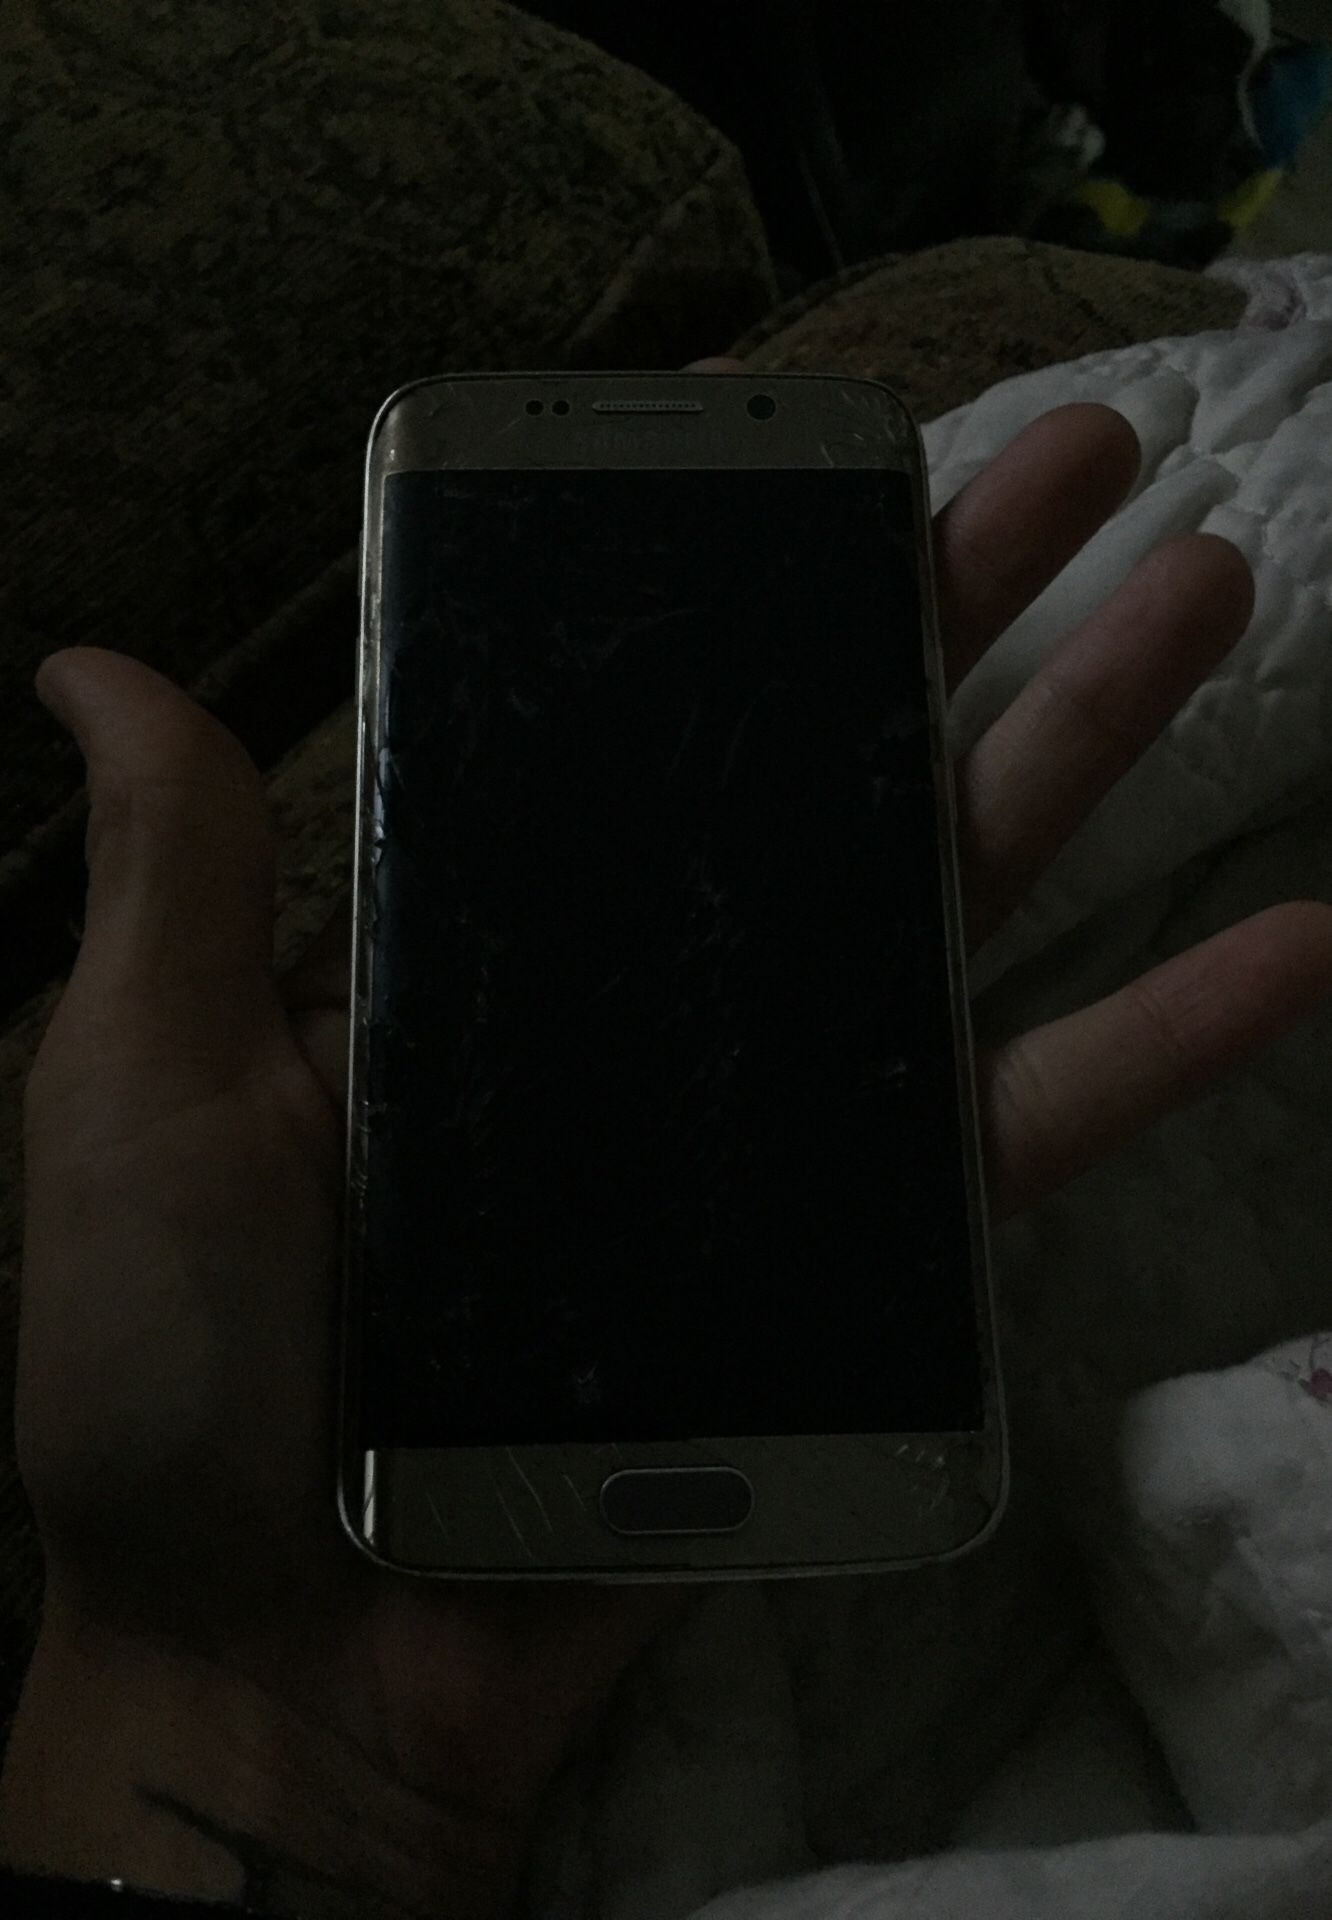 Samsung galaxy S6 edge